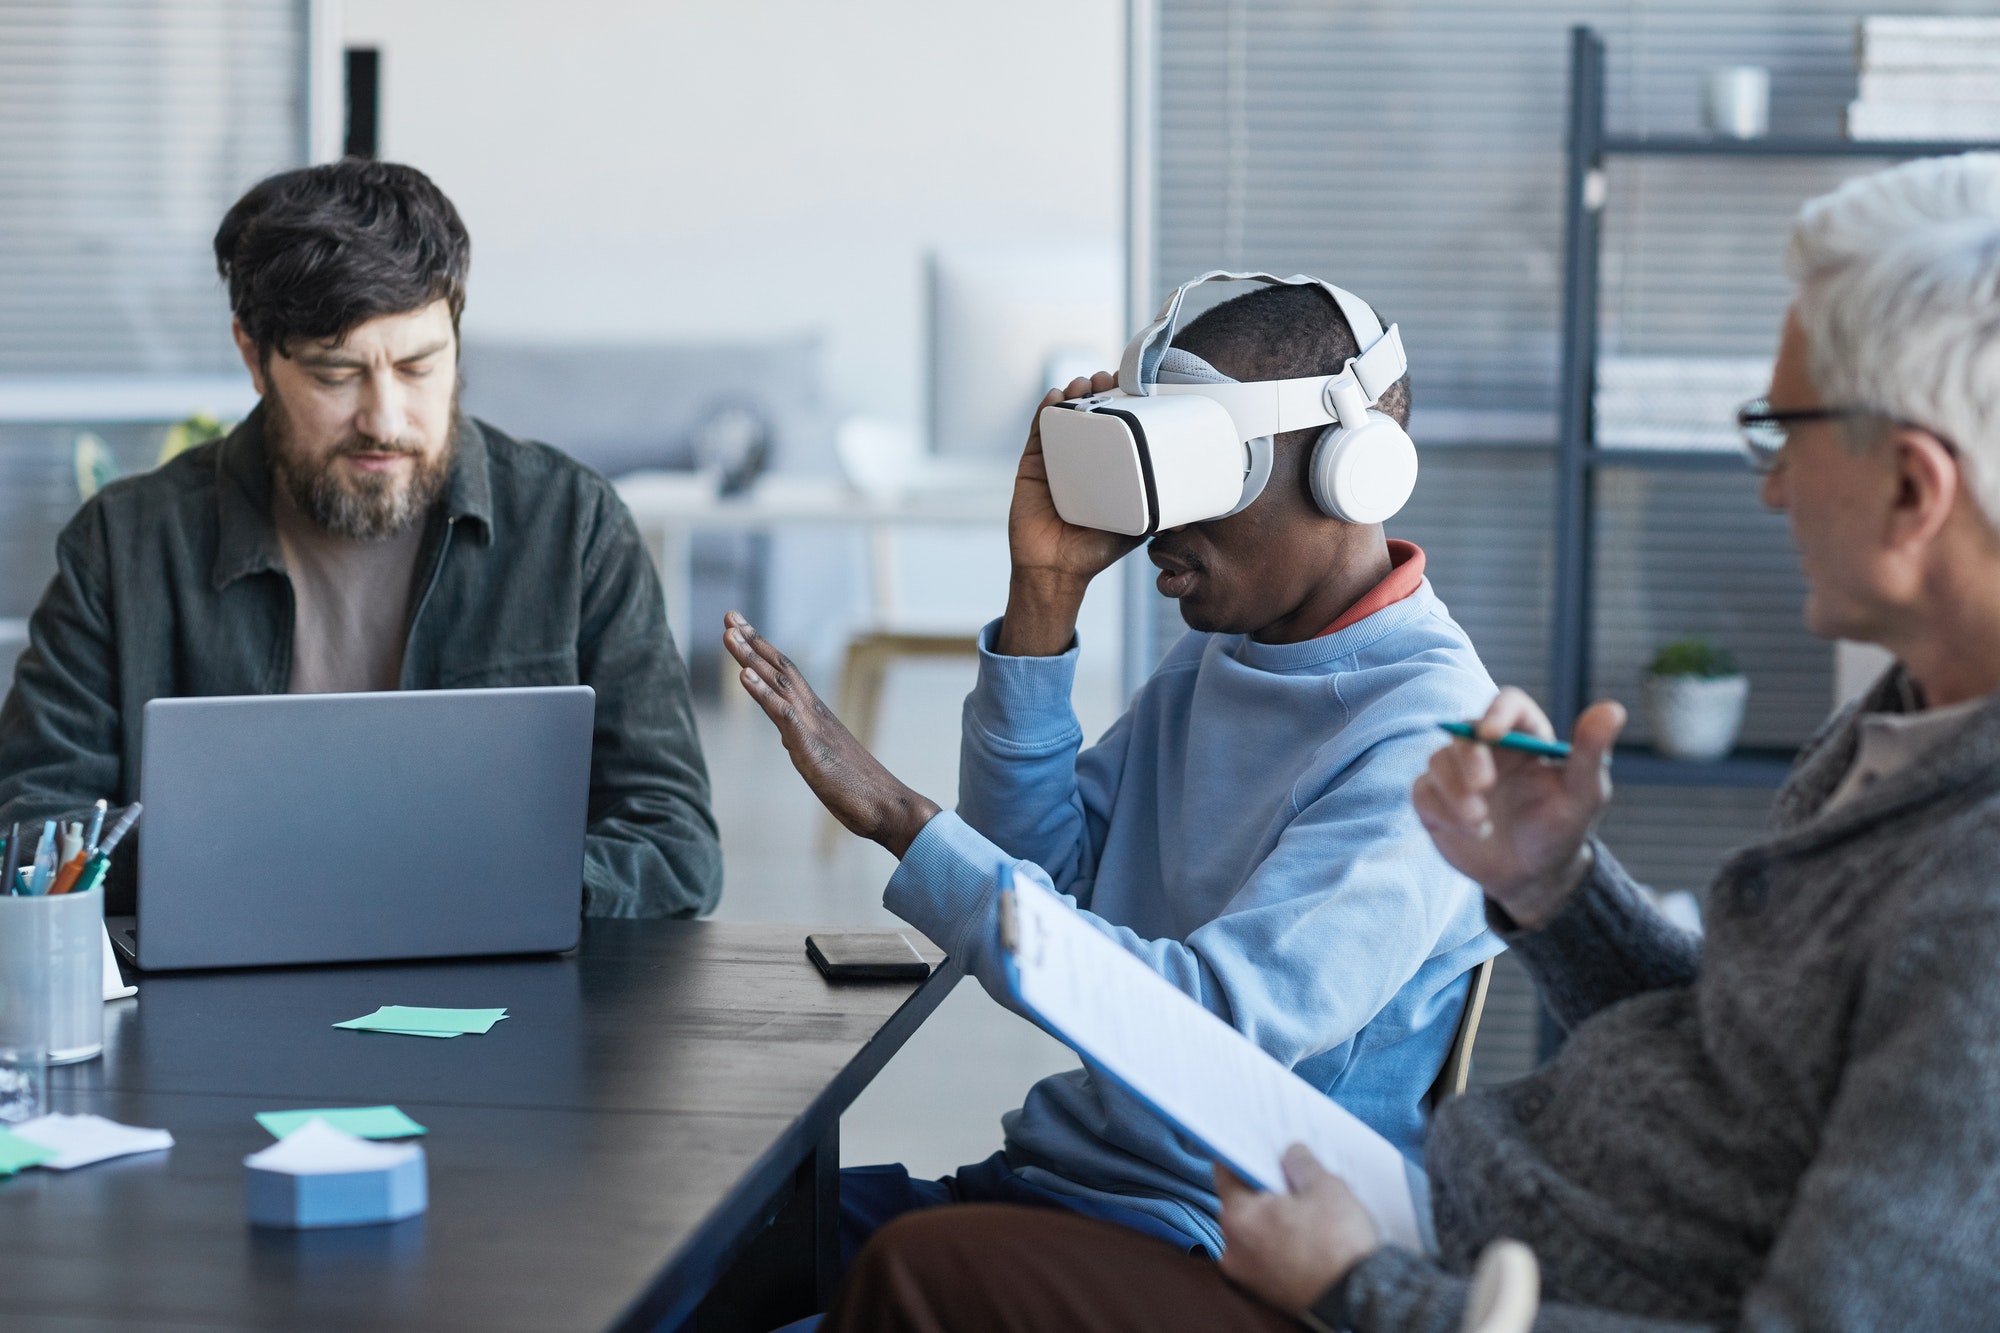 IT Team Testing VR in Office